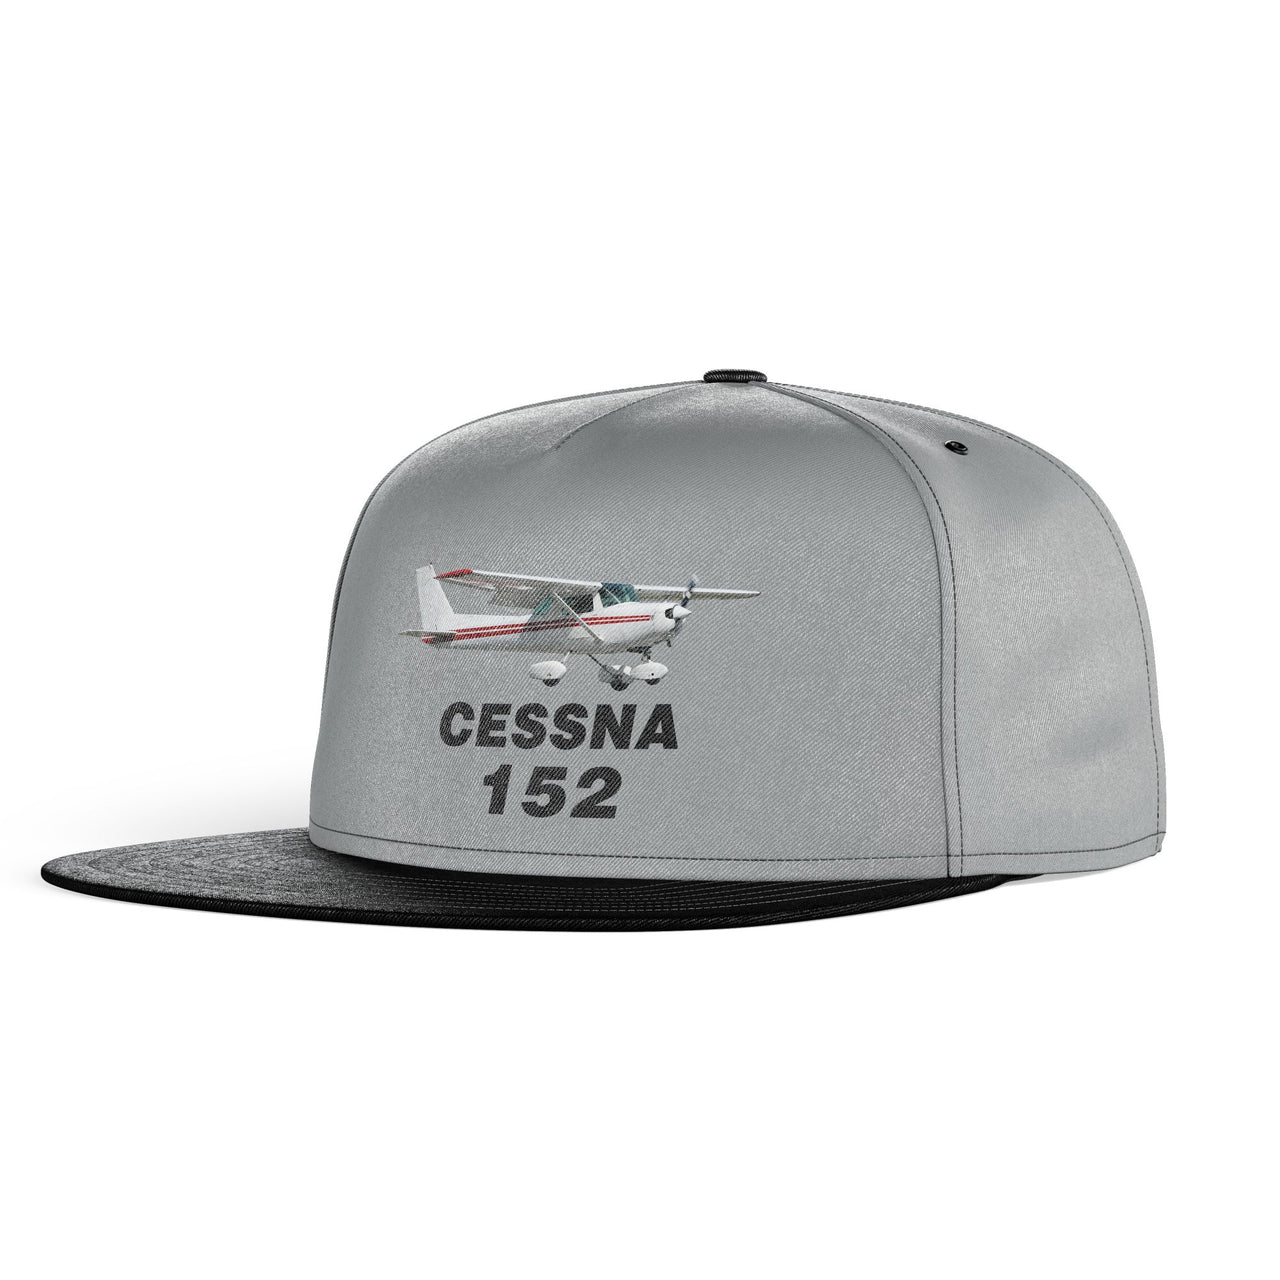 The Cessna 152 Designed Snapback Caps & Hats